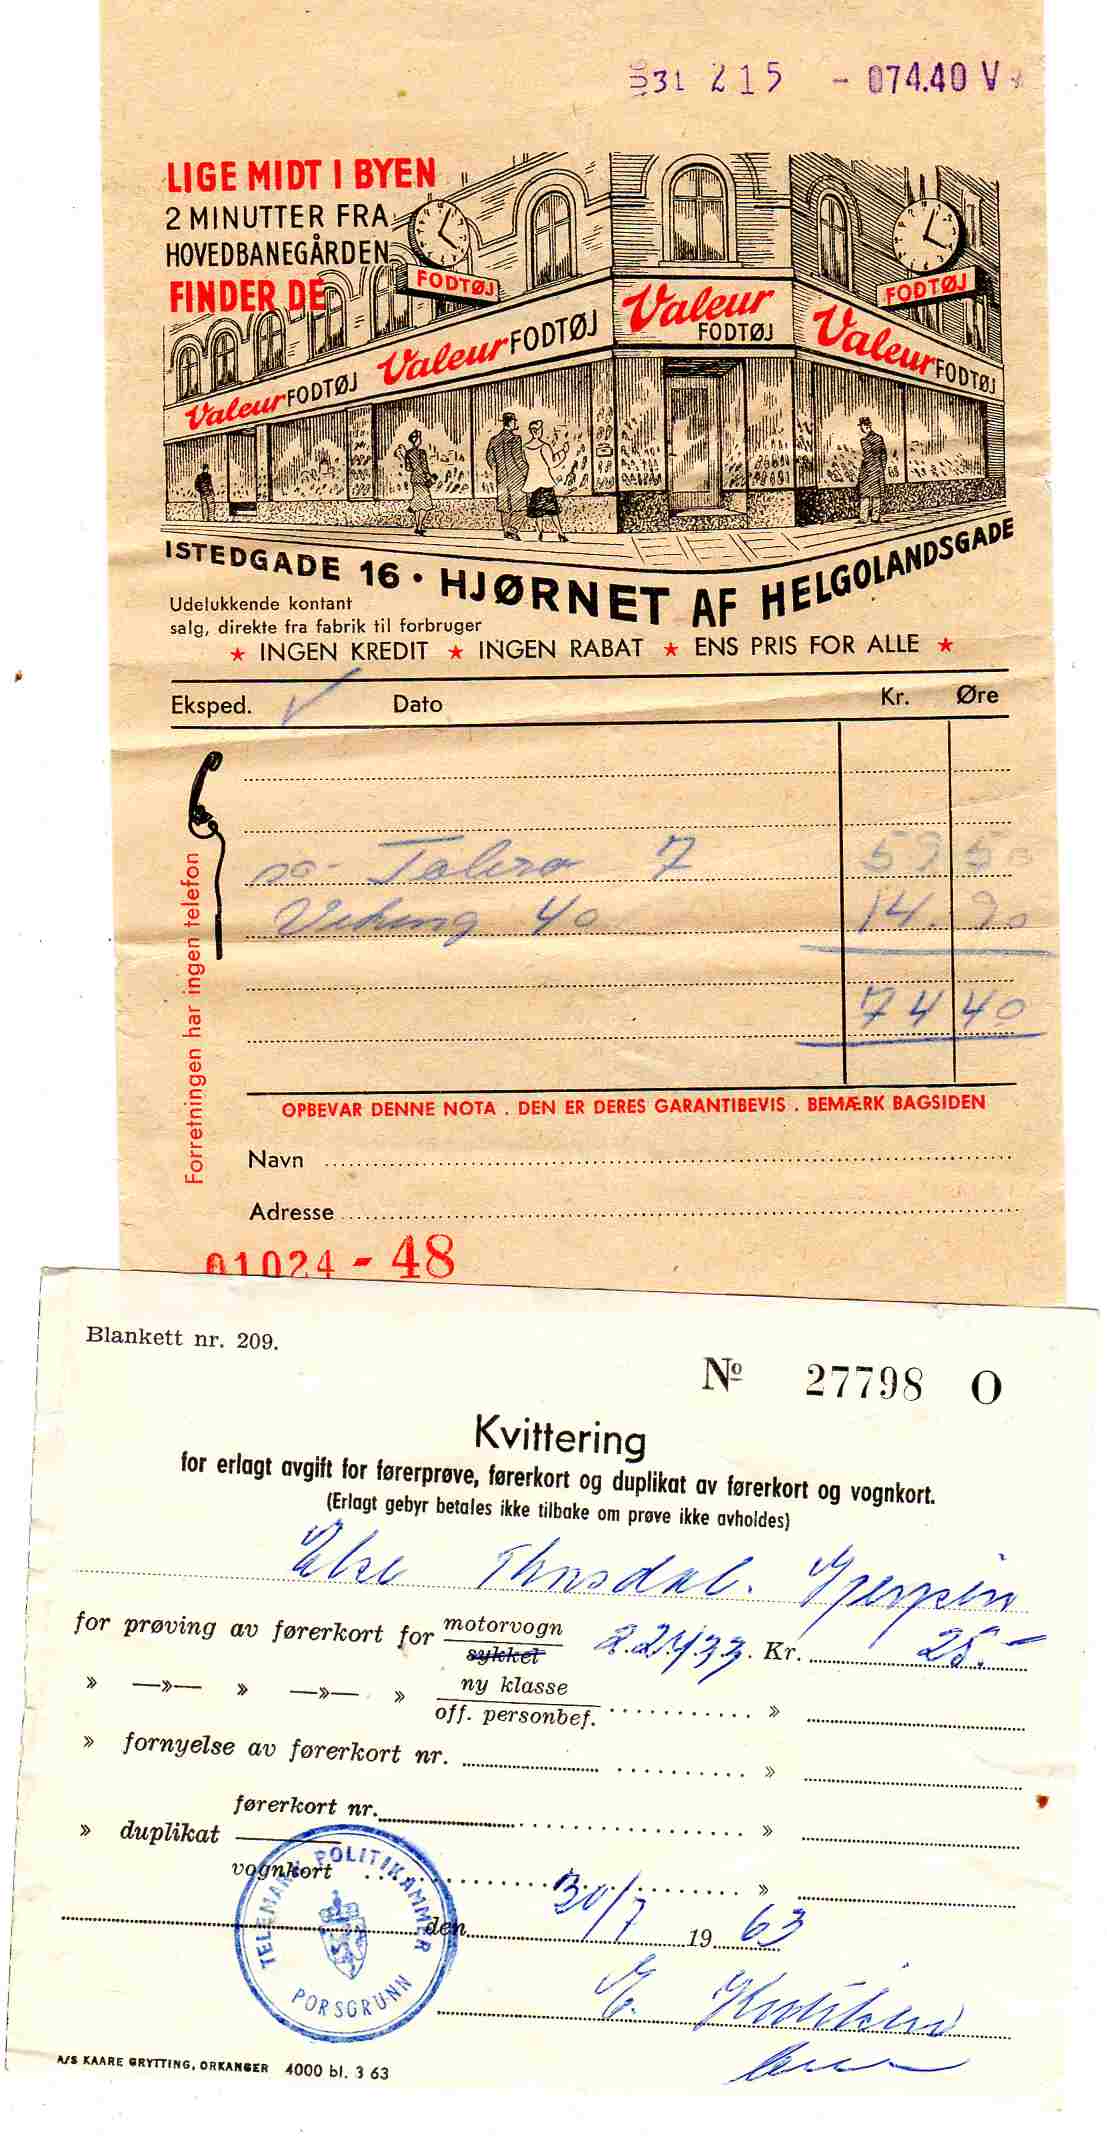 Førerprøve st telemark politikammer Porsgrunn 1963/Valeur fodtøj København